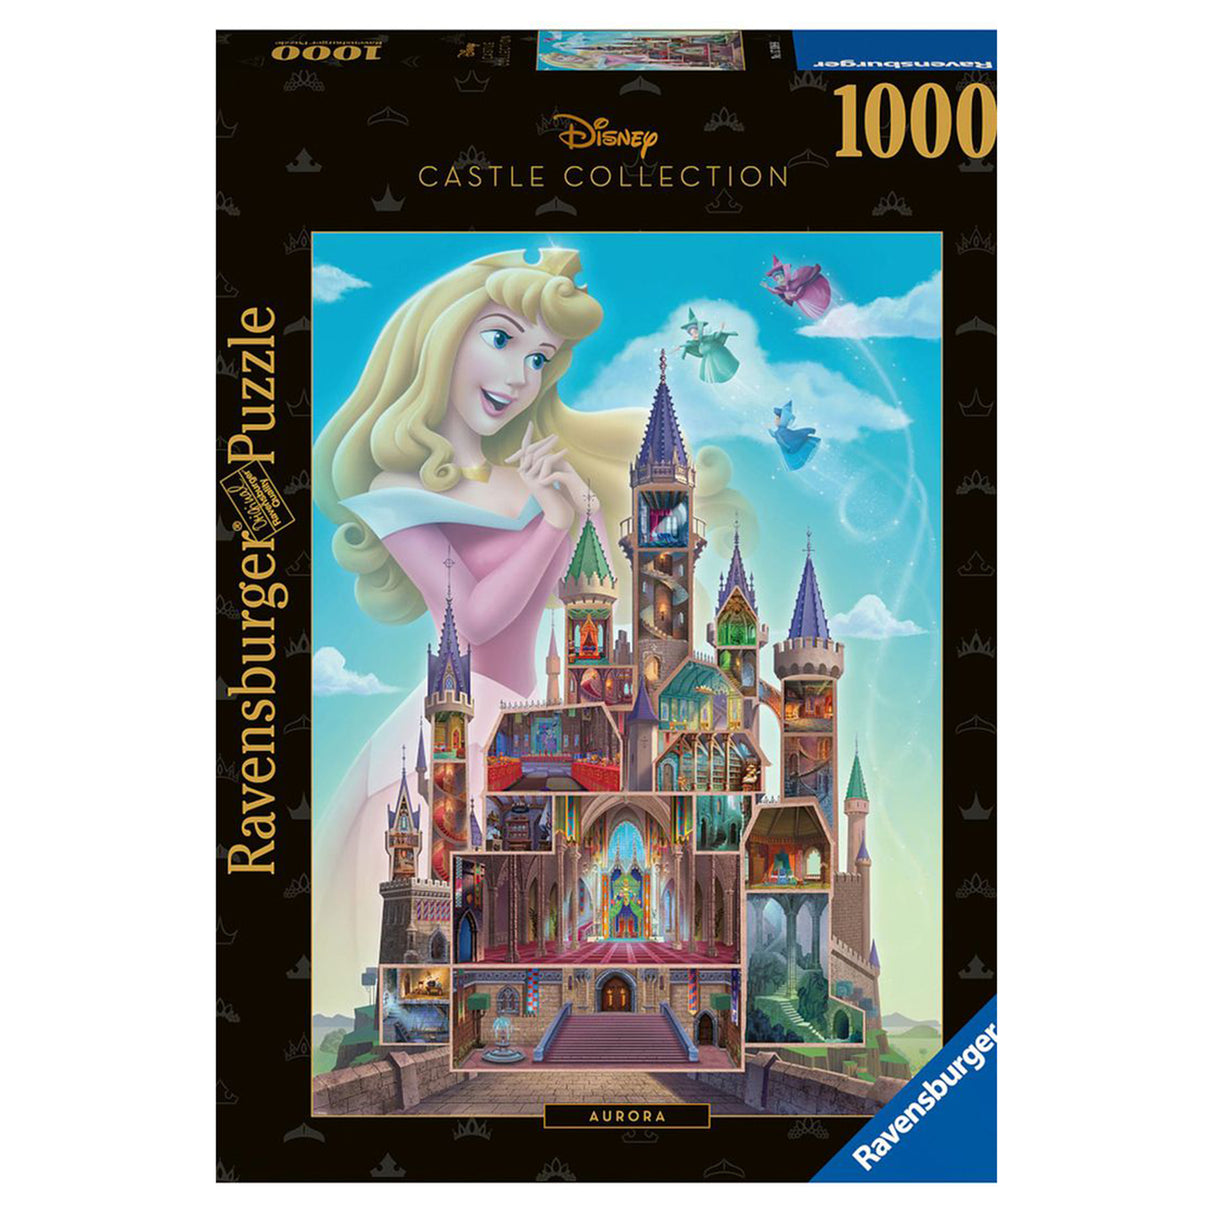 Ravensburger Disney Castles: Aurora Puzzle (1000 pieces)